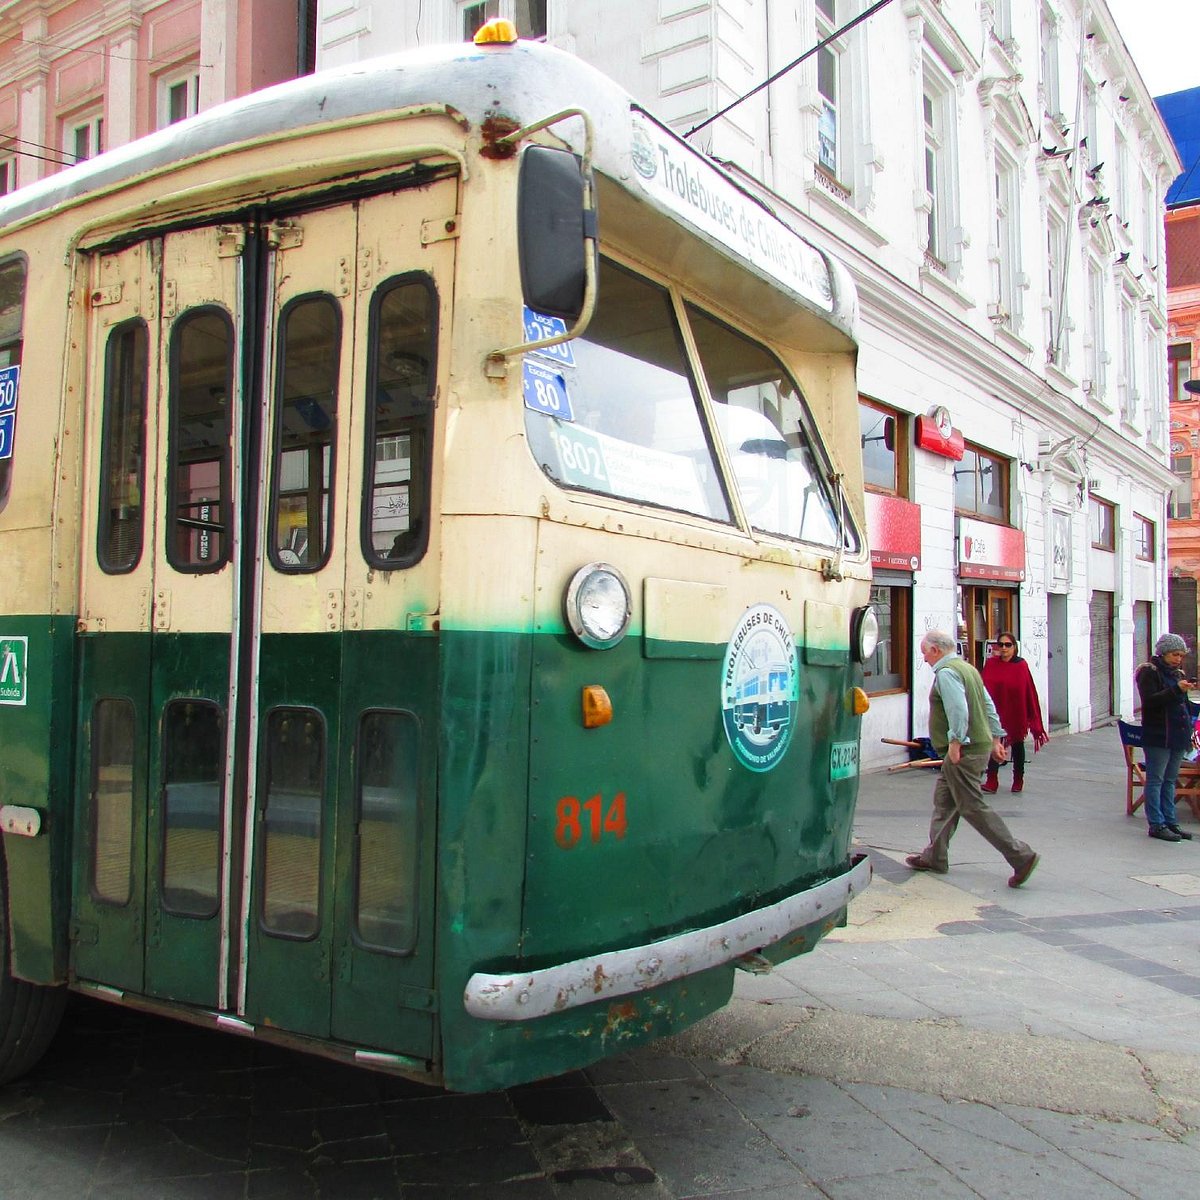 travel bus valparaiso